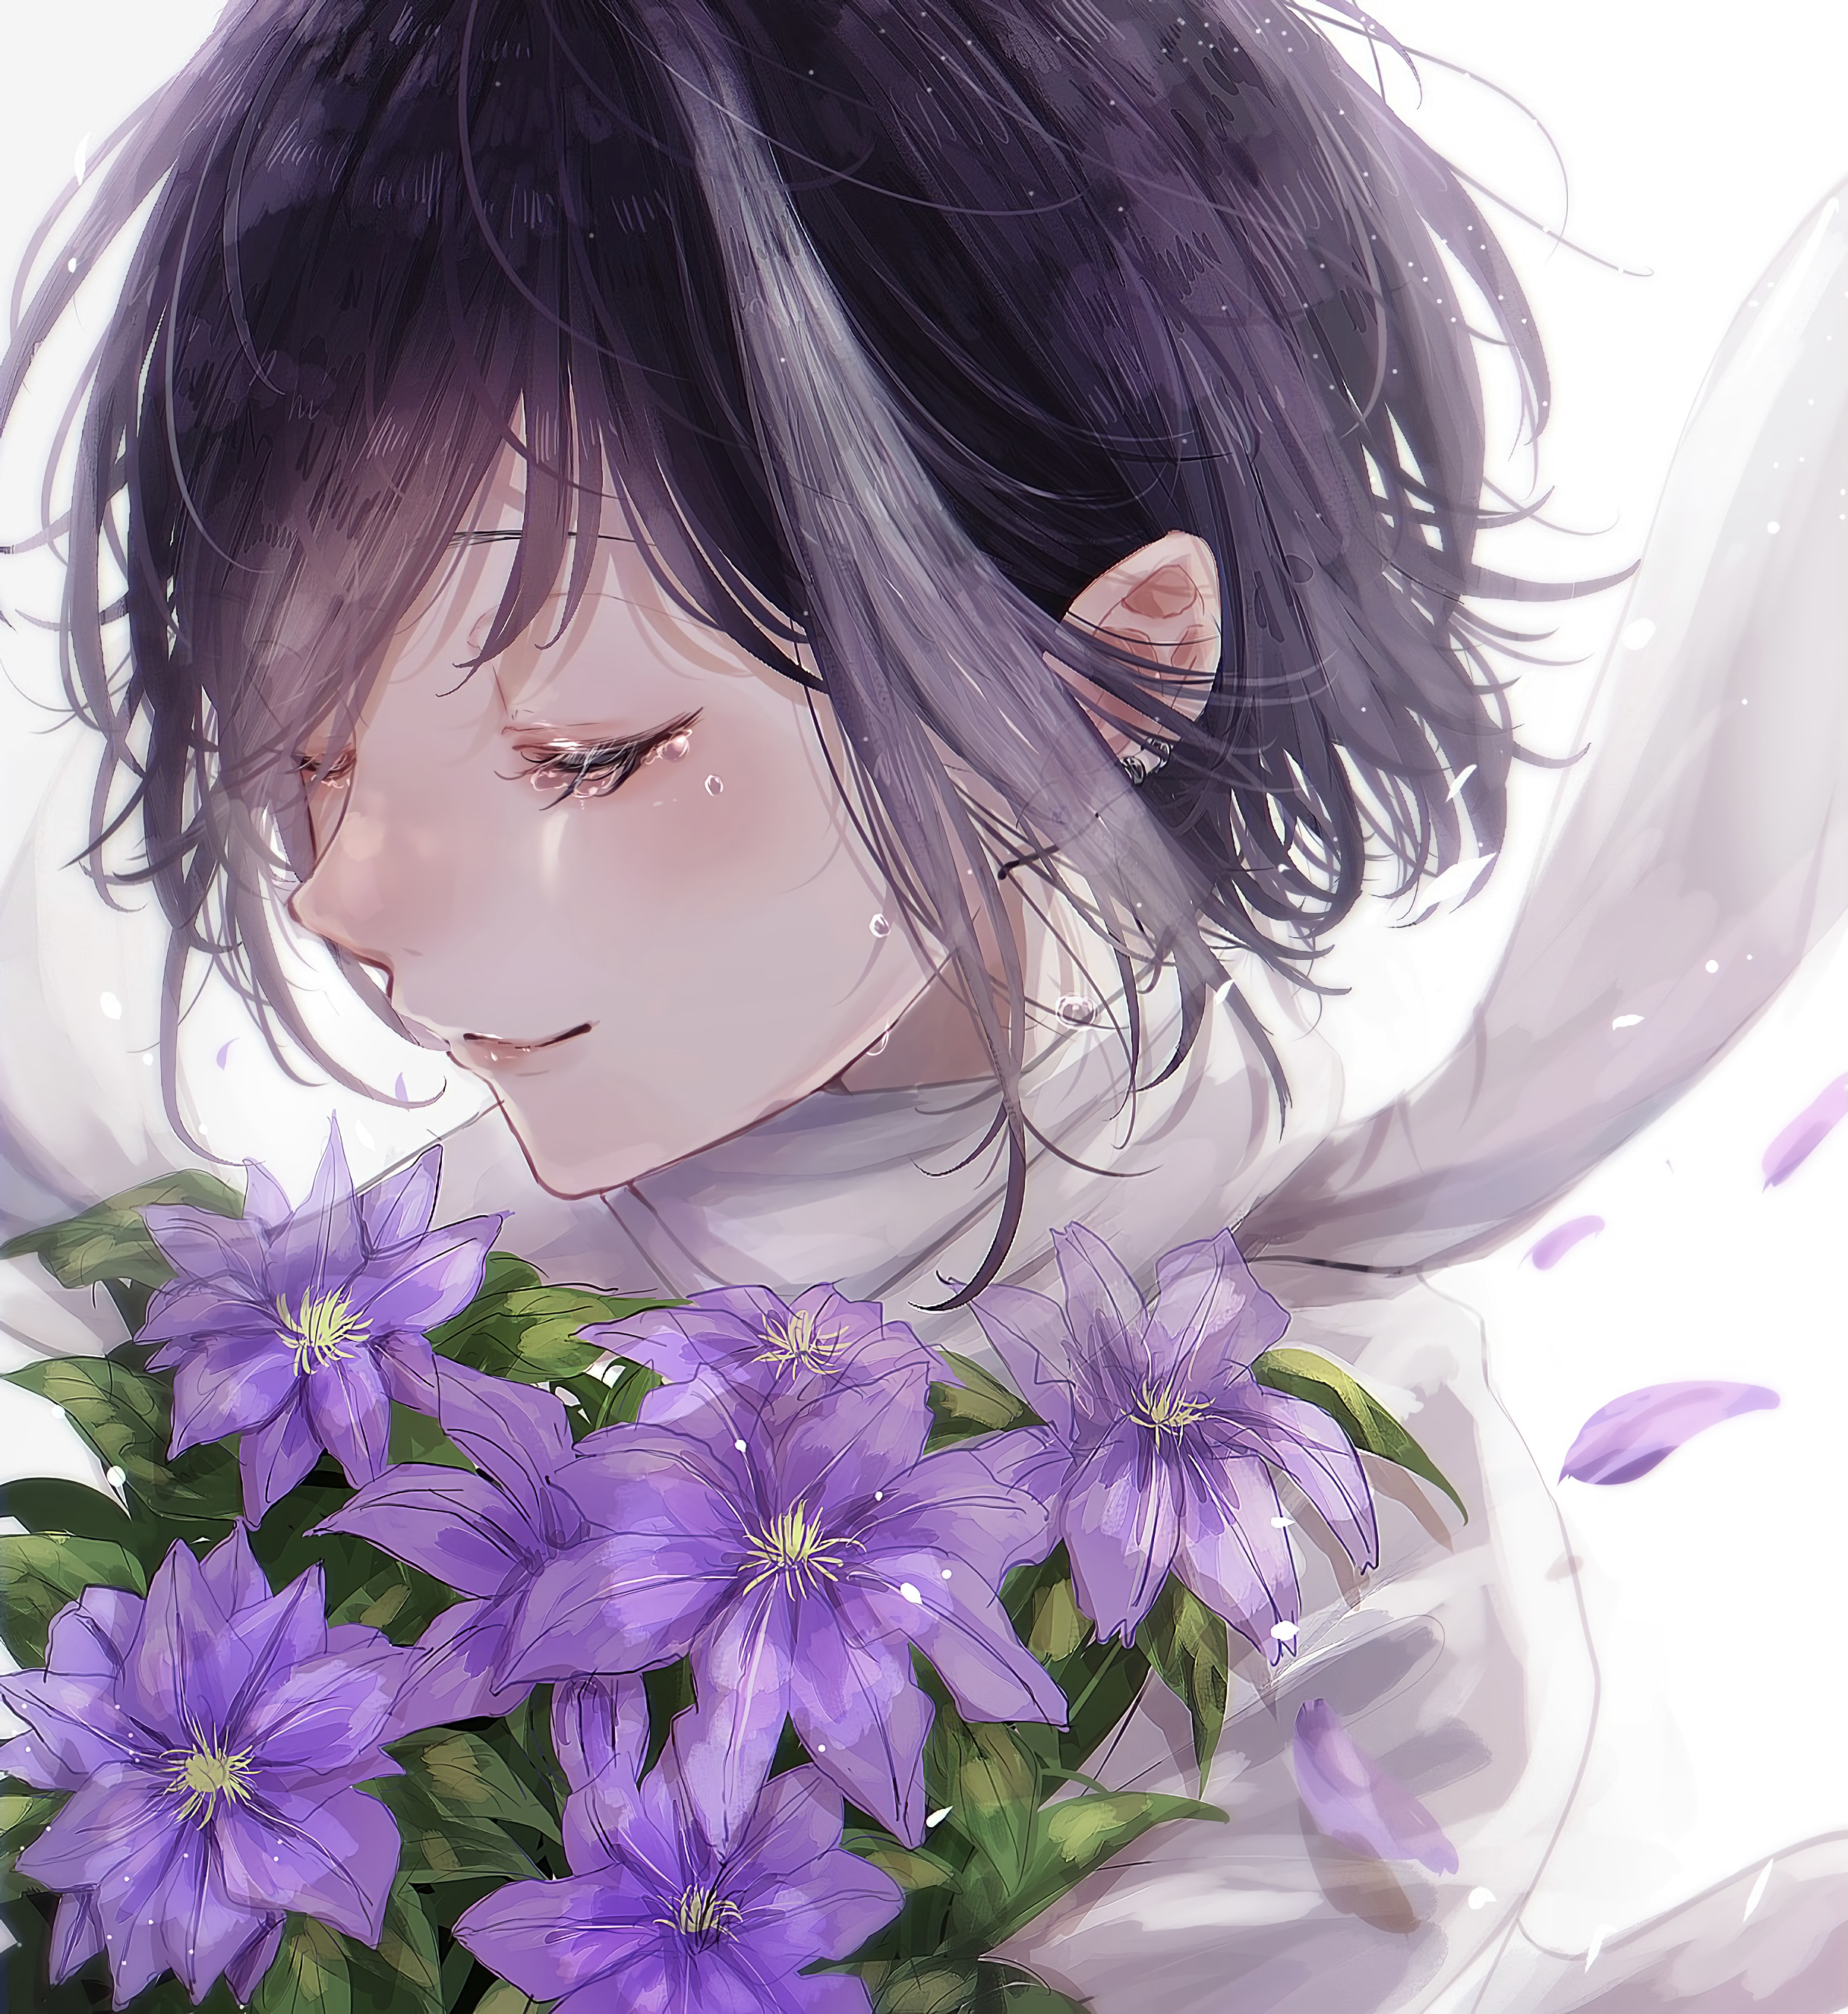 Girl Flowers Tears Sad Anime Art